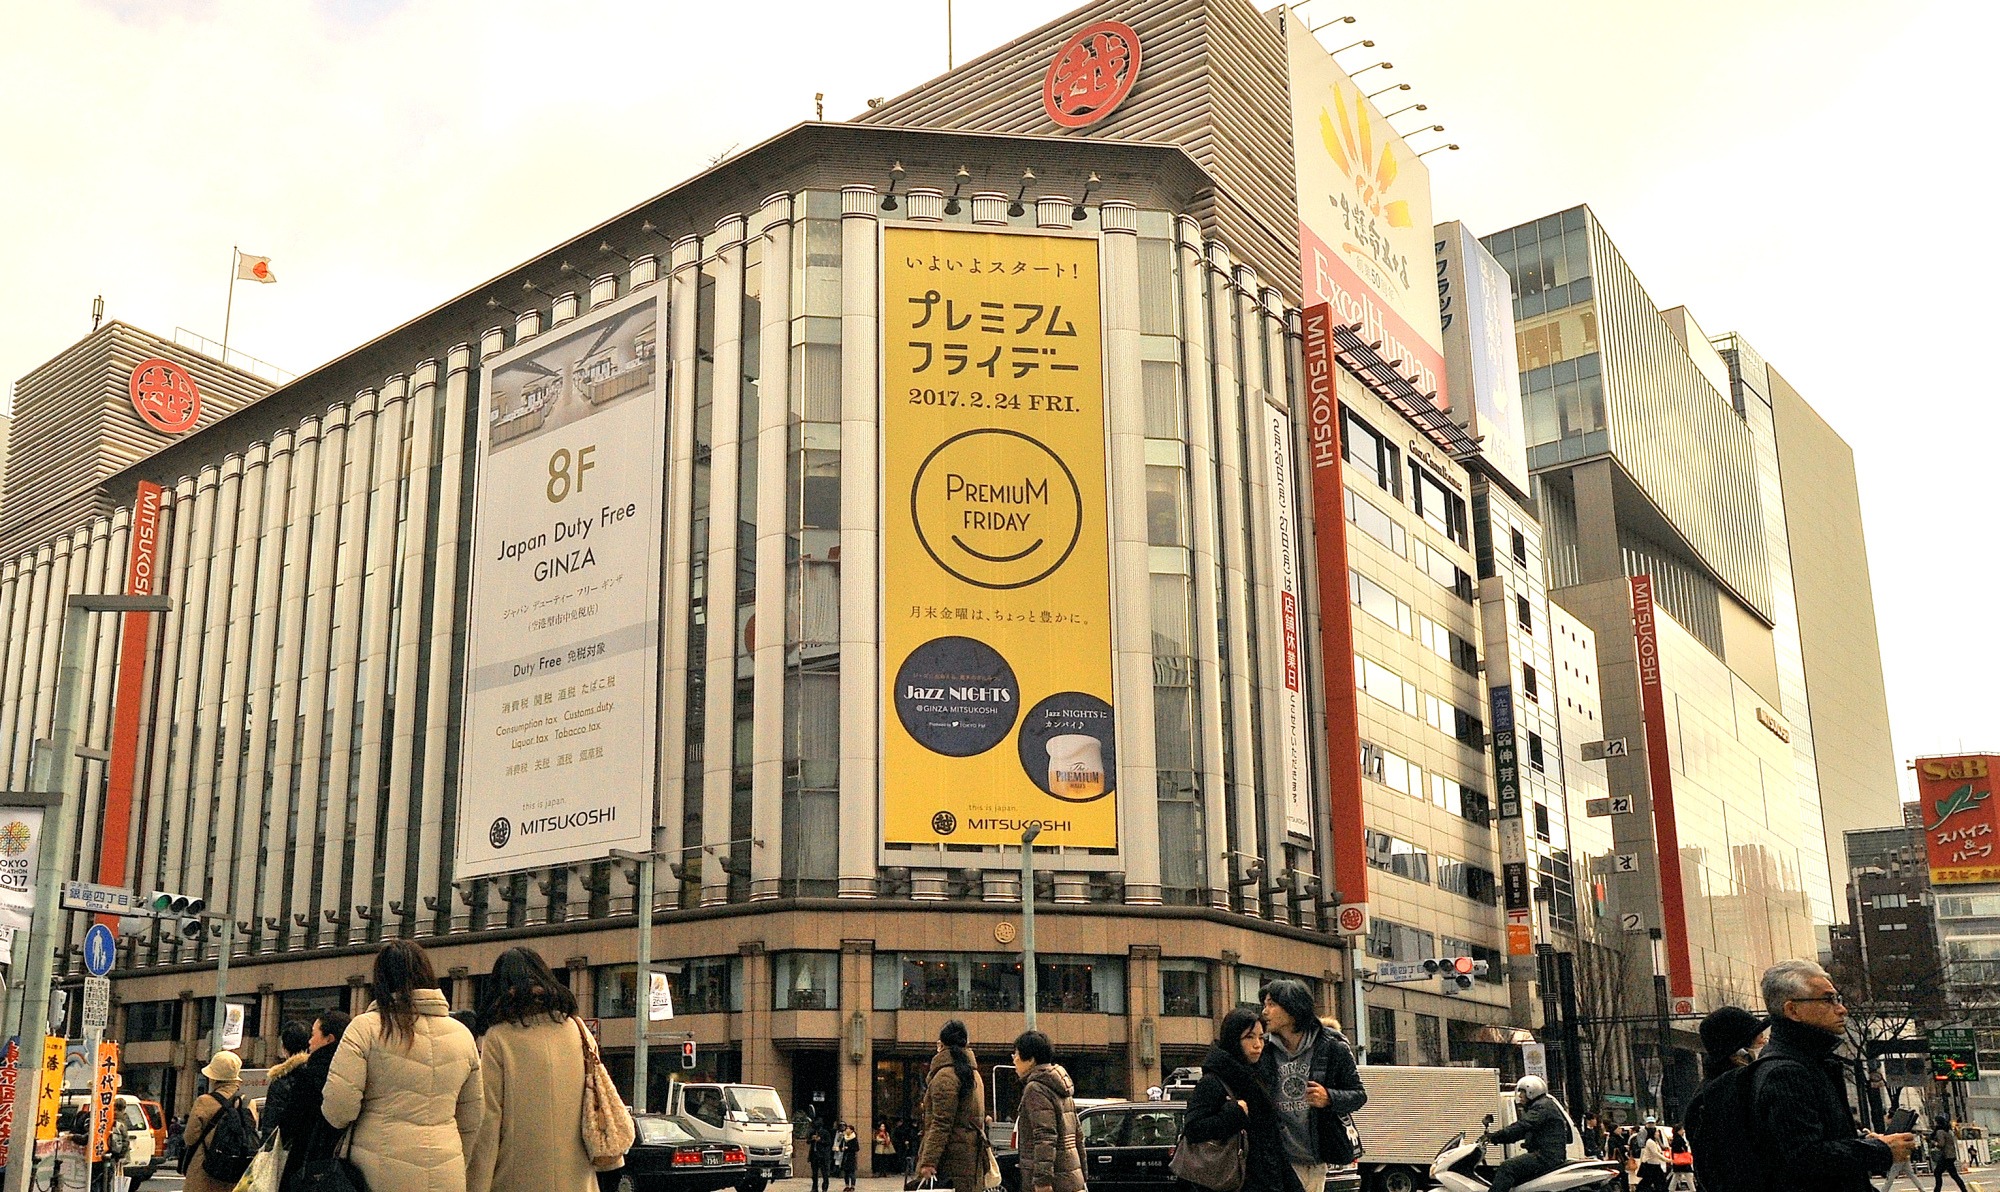 Facade du grand magasin Mitsukoshi avec une banderole presentant le Premium Friday